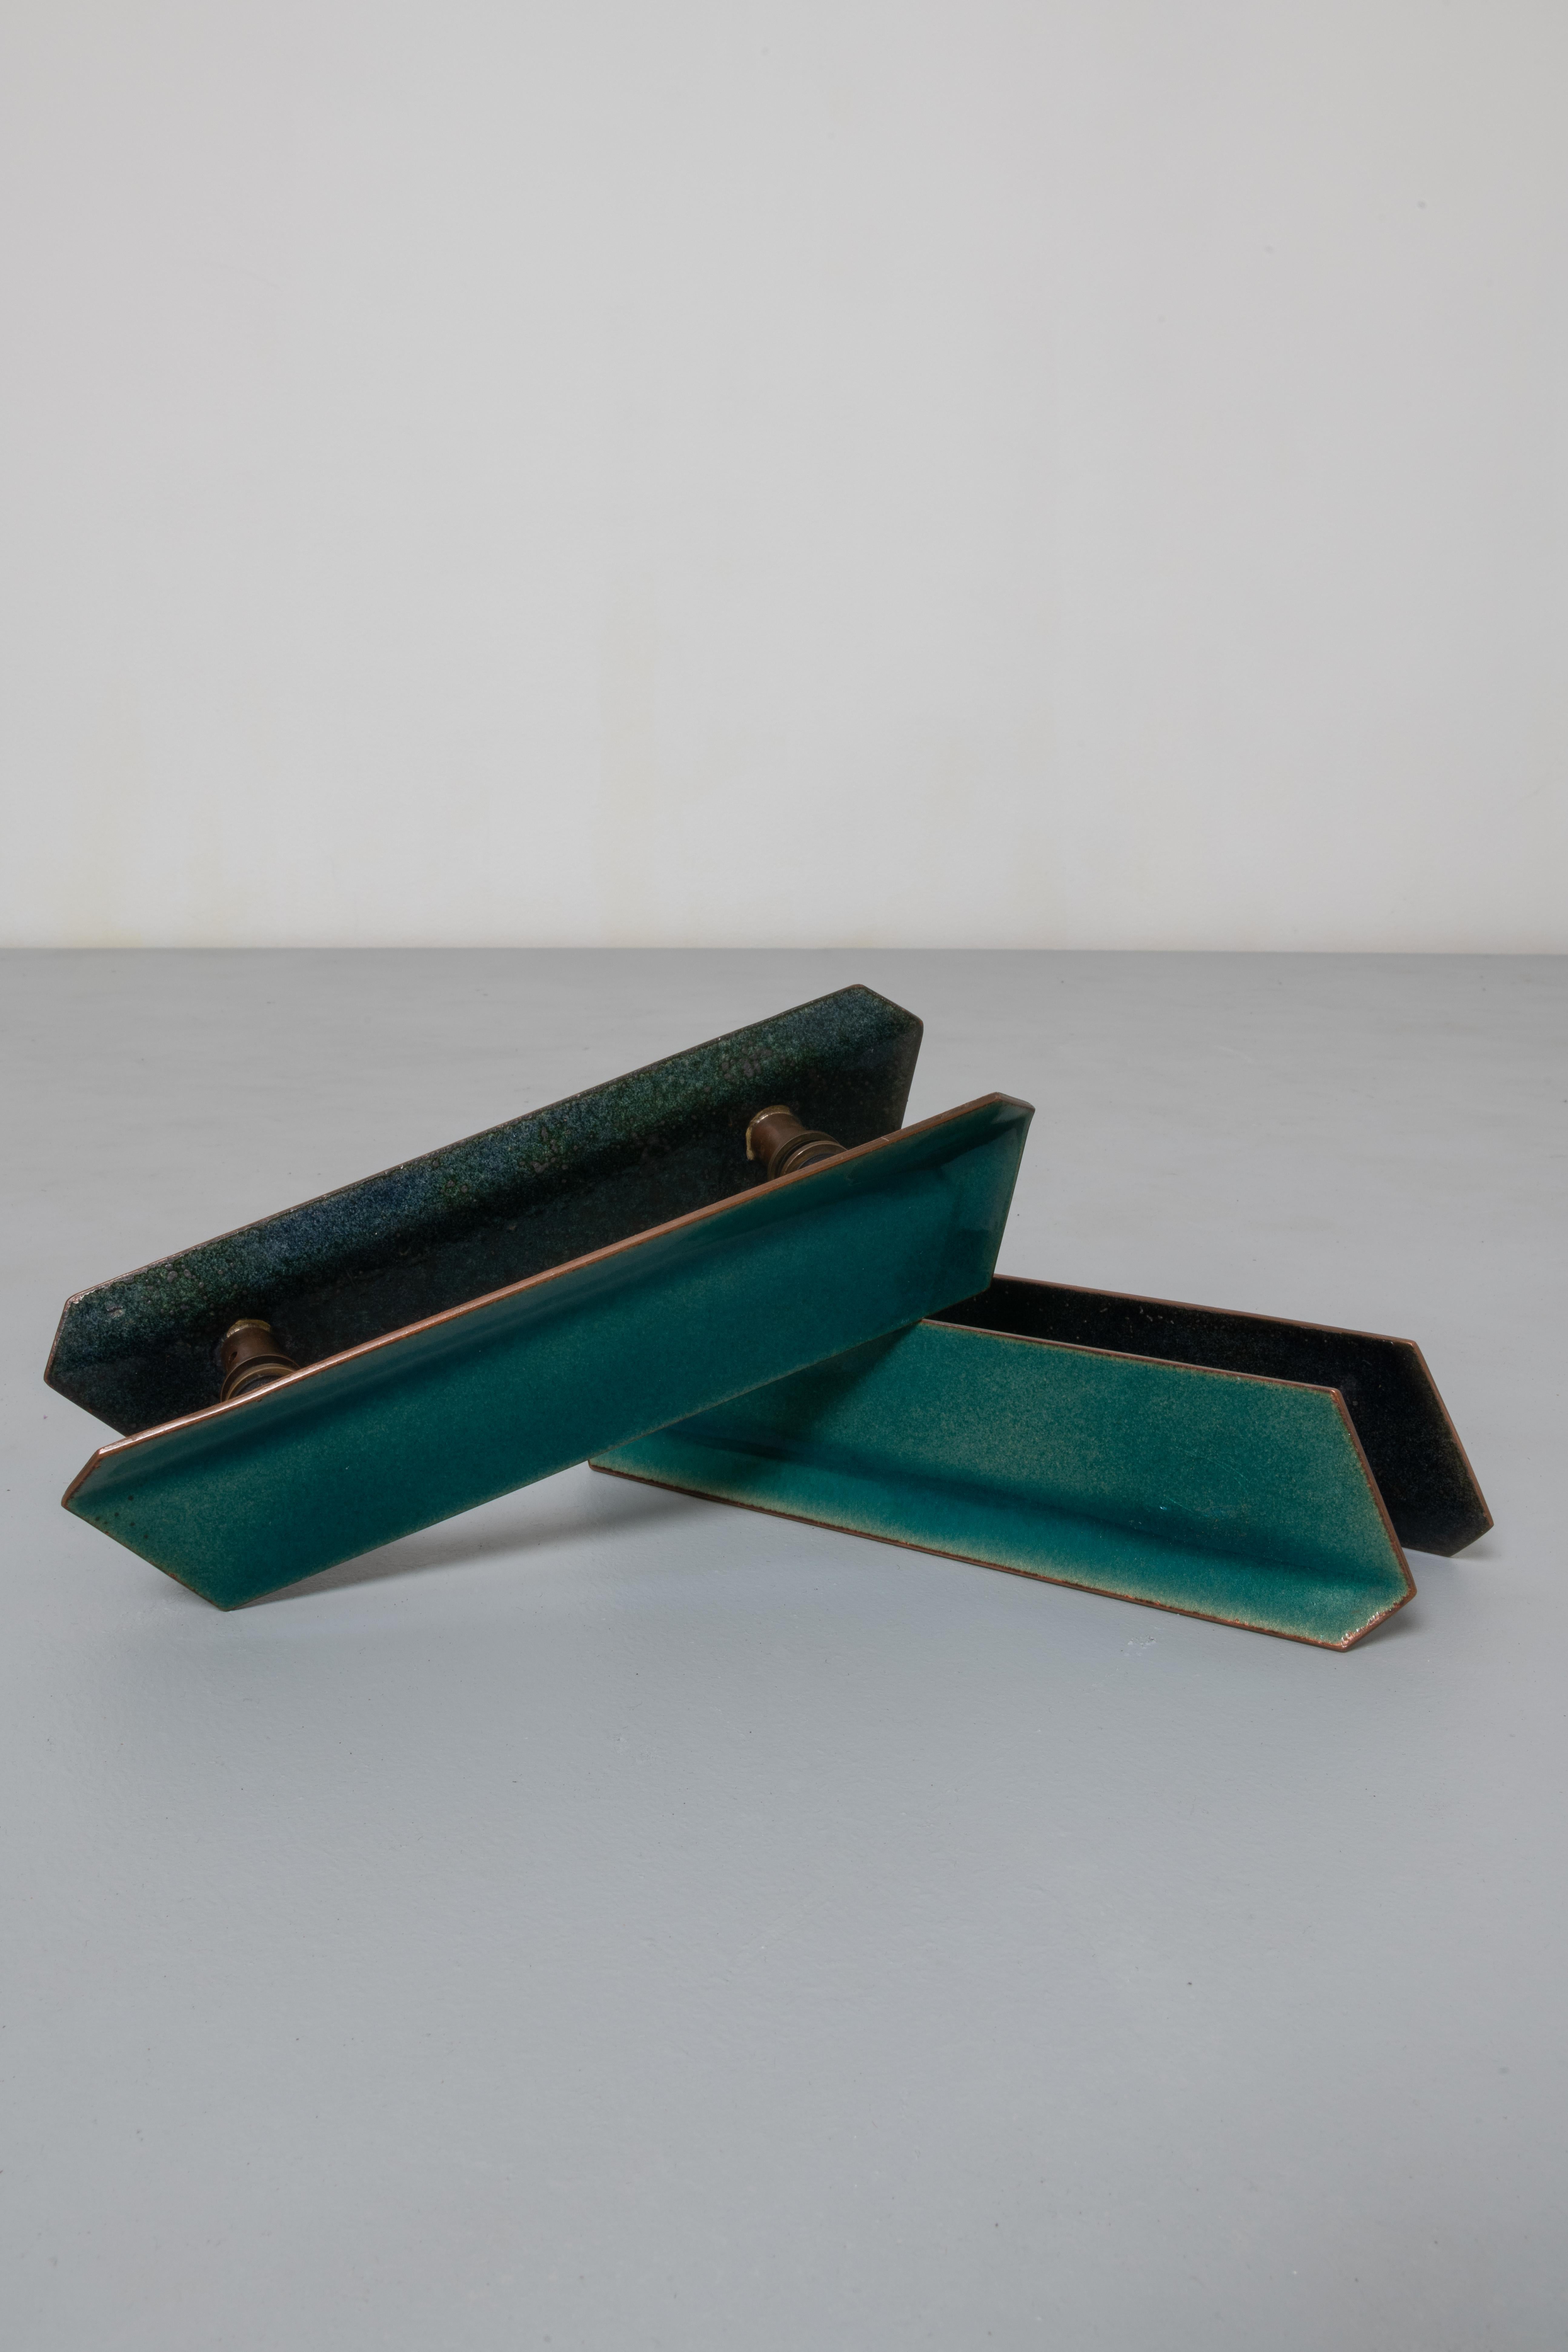 Copper Paolo De Poli Prod, Italy, C. 1970 Pair of Handles in Emerald Green 